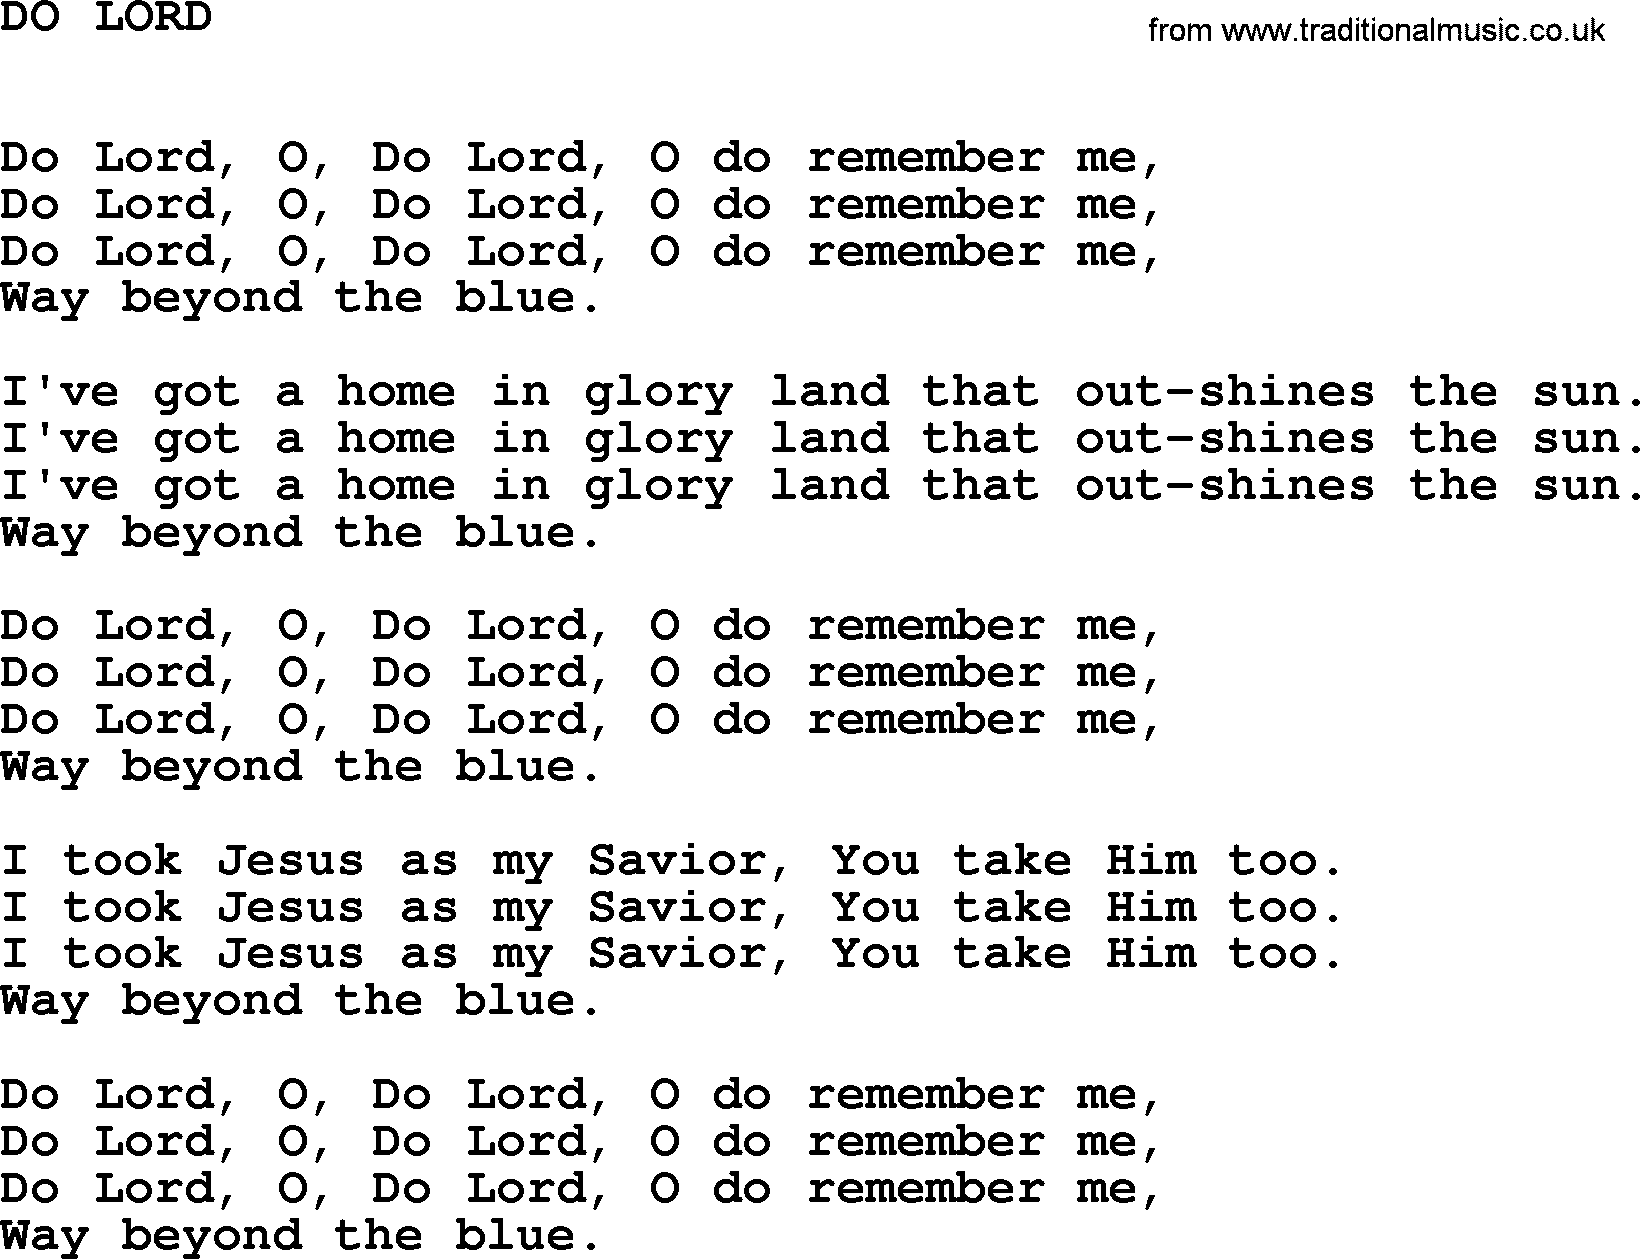 Johnny Cash song Do Lord.txt lyrics